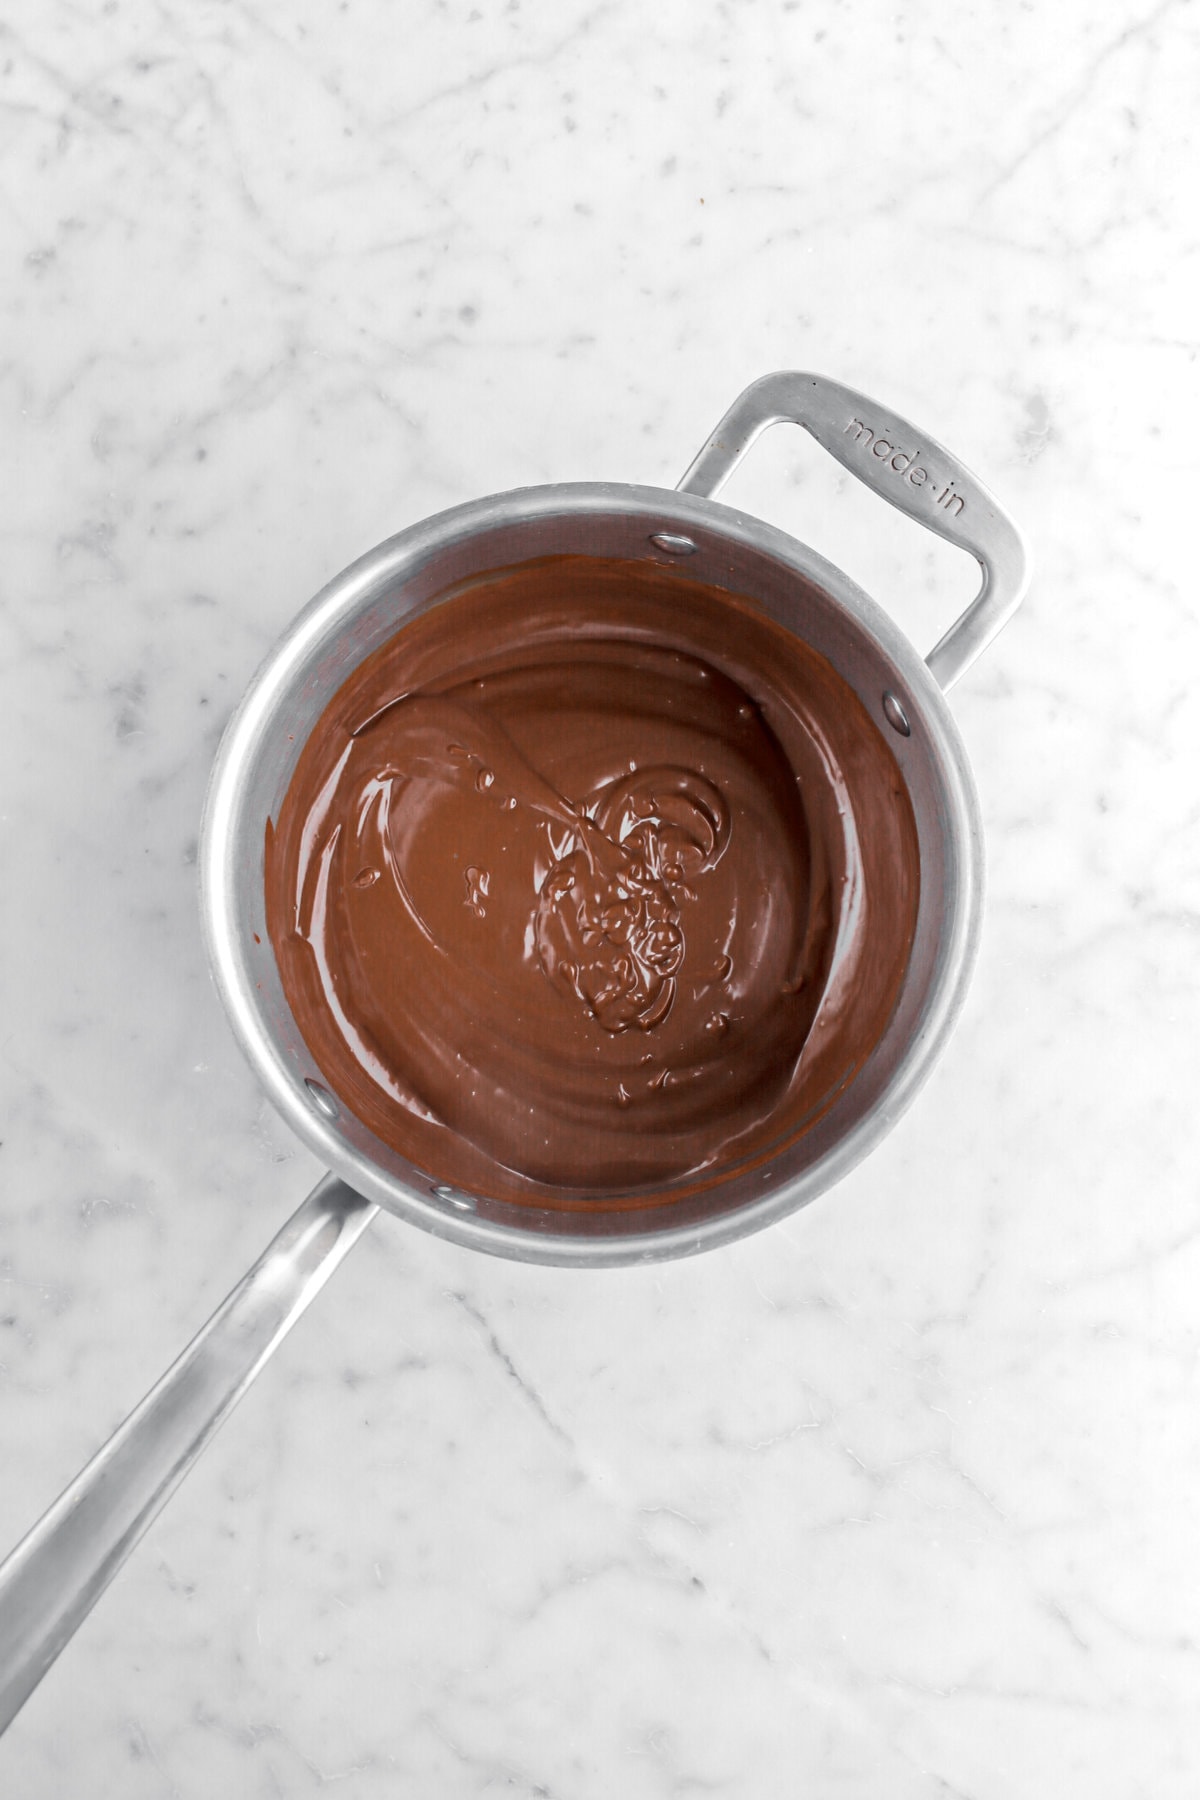 vanilla stirred into chocolate pudding.